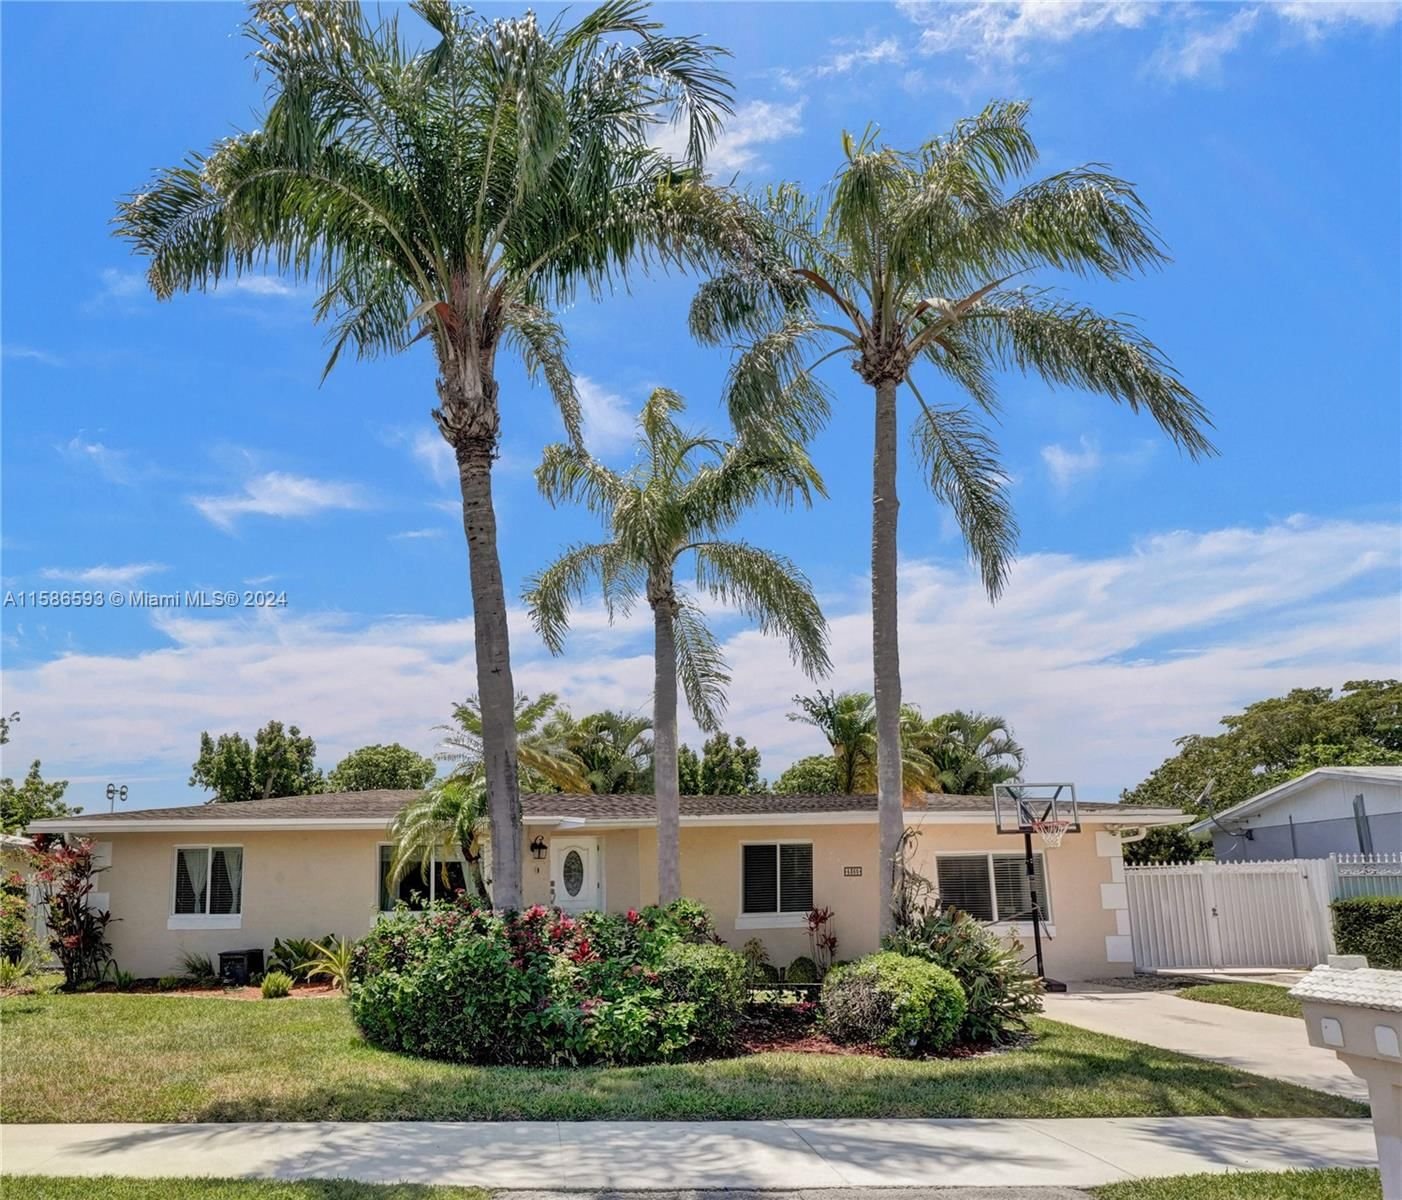 Real estate property located at 5360 132nd Pl, Miami-Dade County, SAN SEBASTIAN UNIT 2, Miami, FL